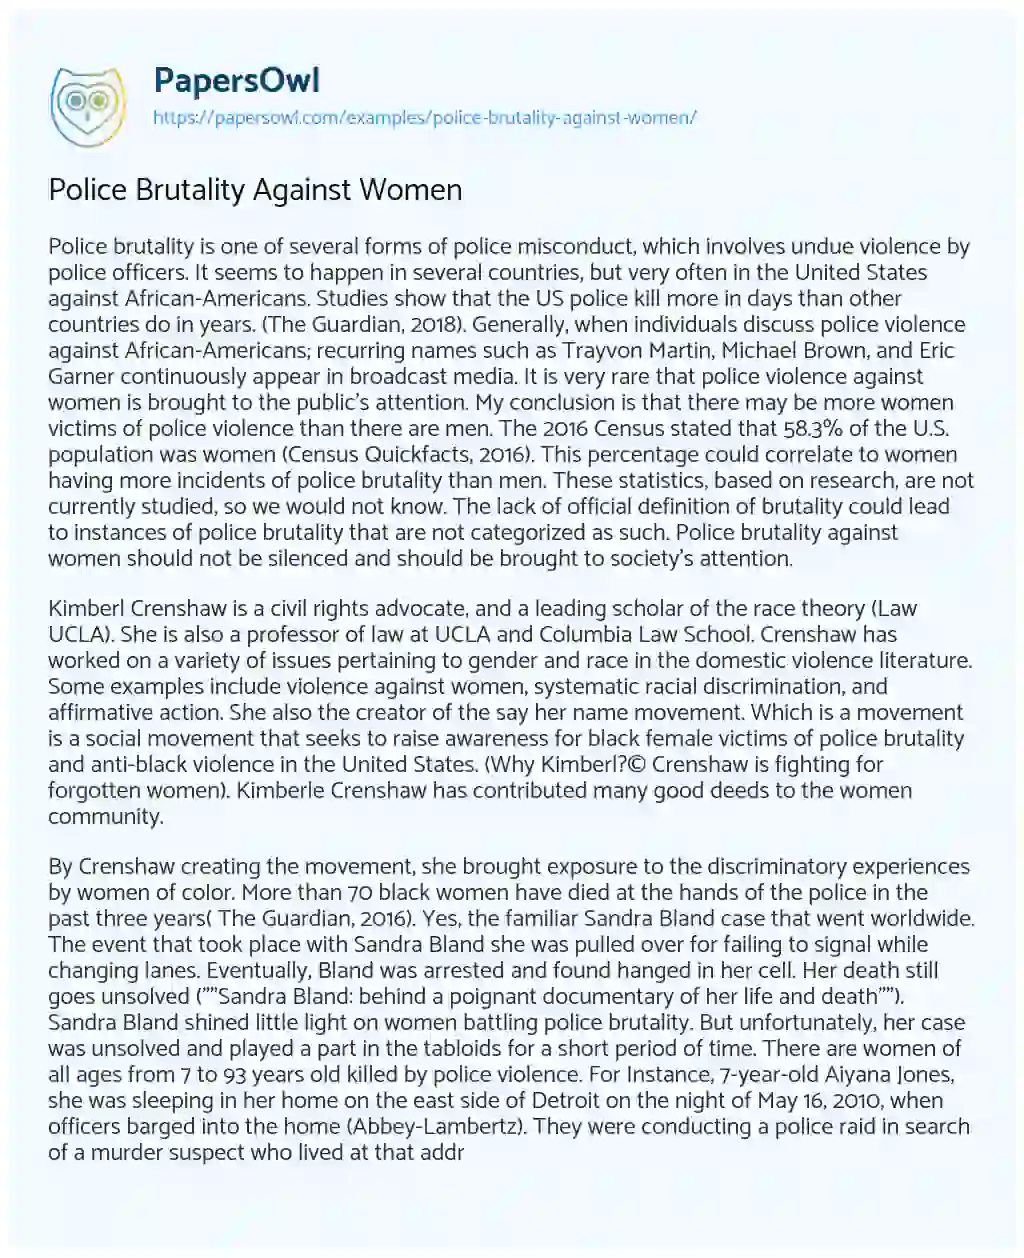 Essay on Police Brutality against Women